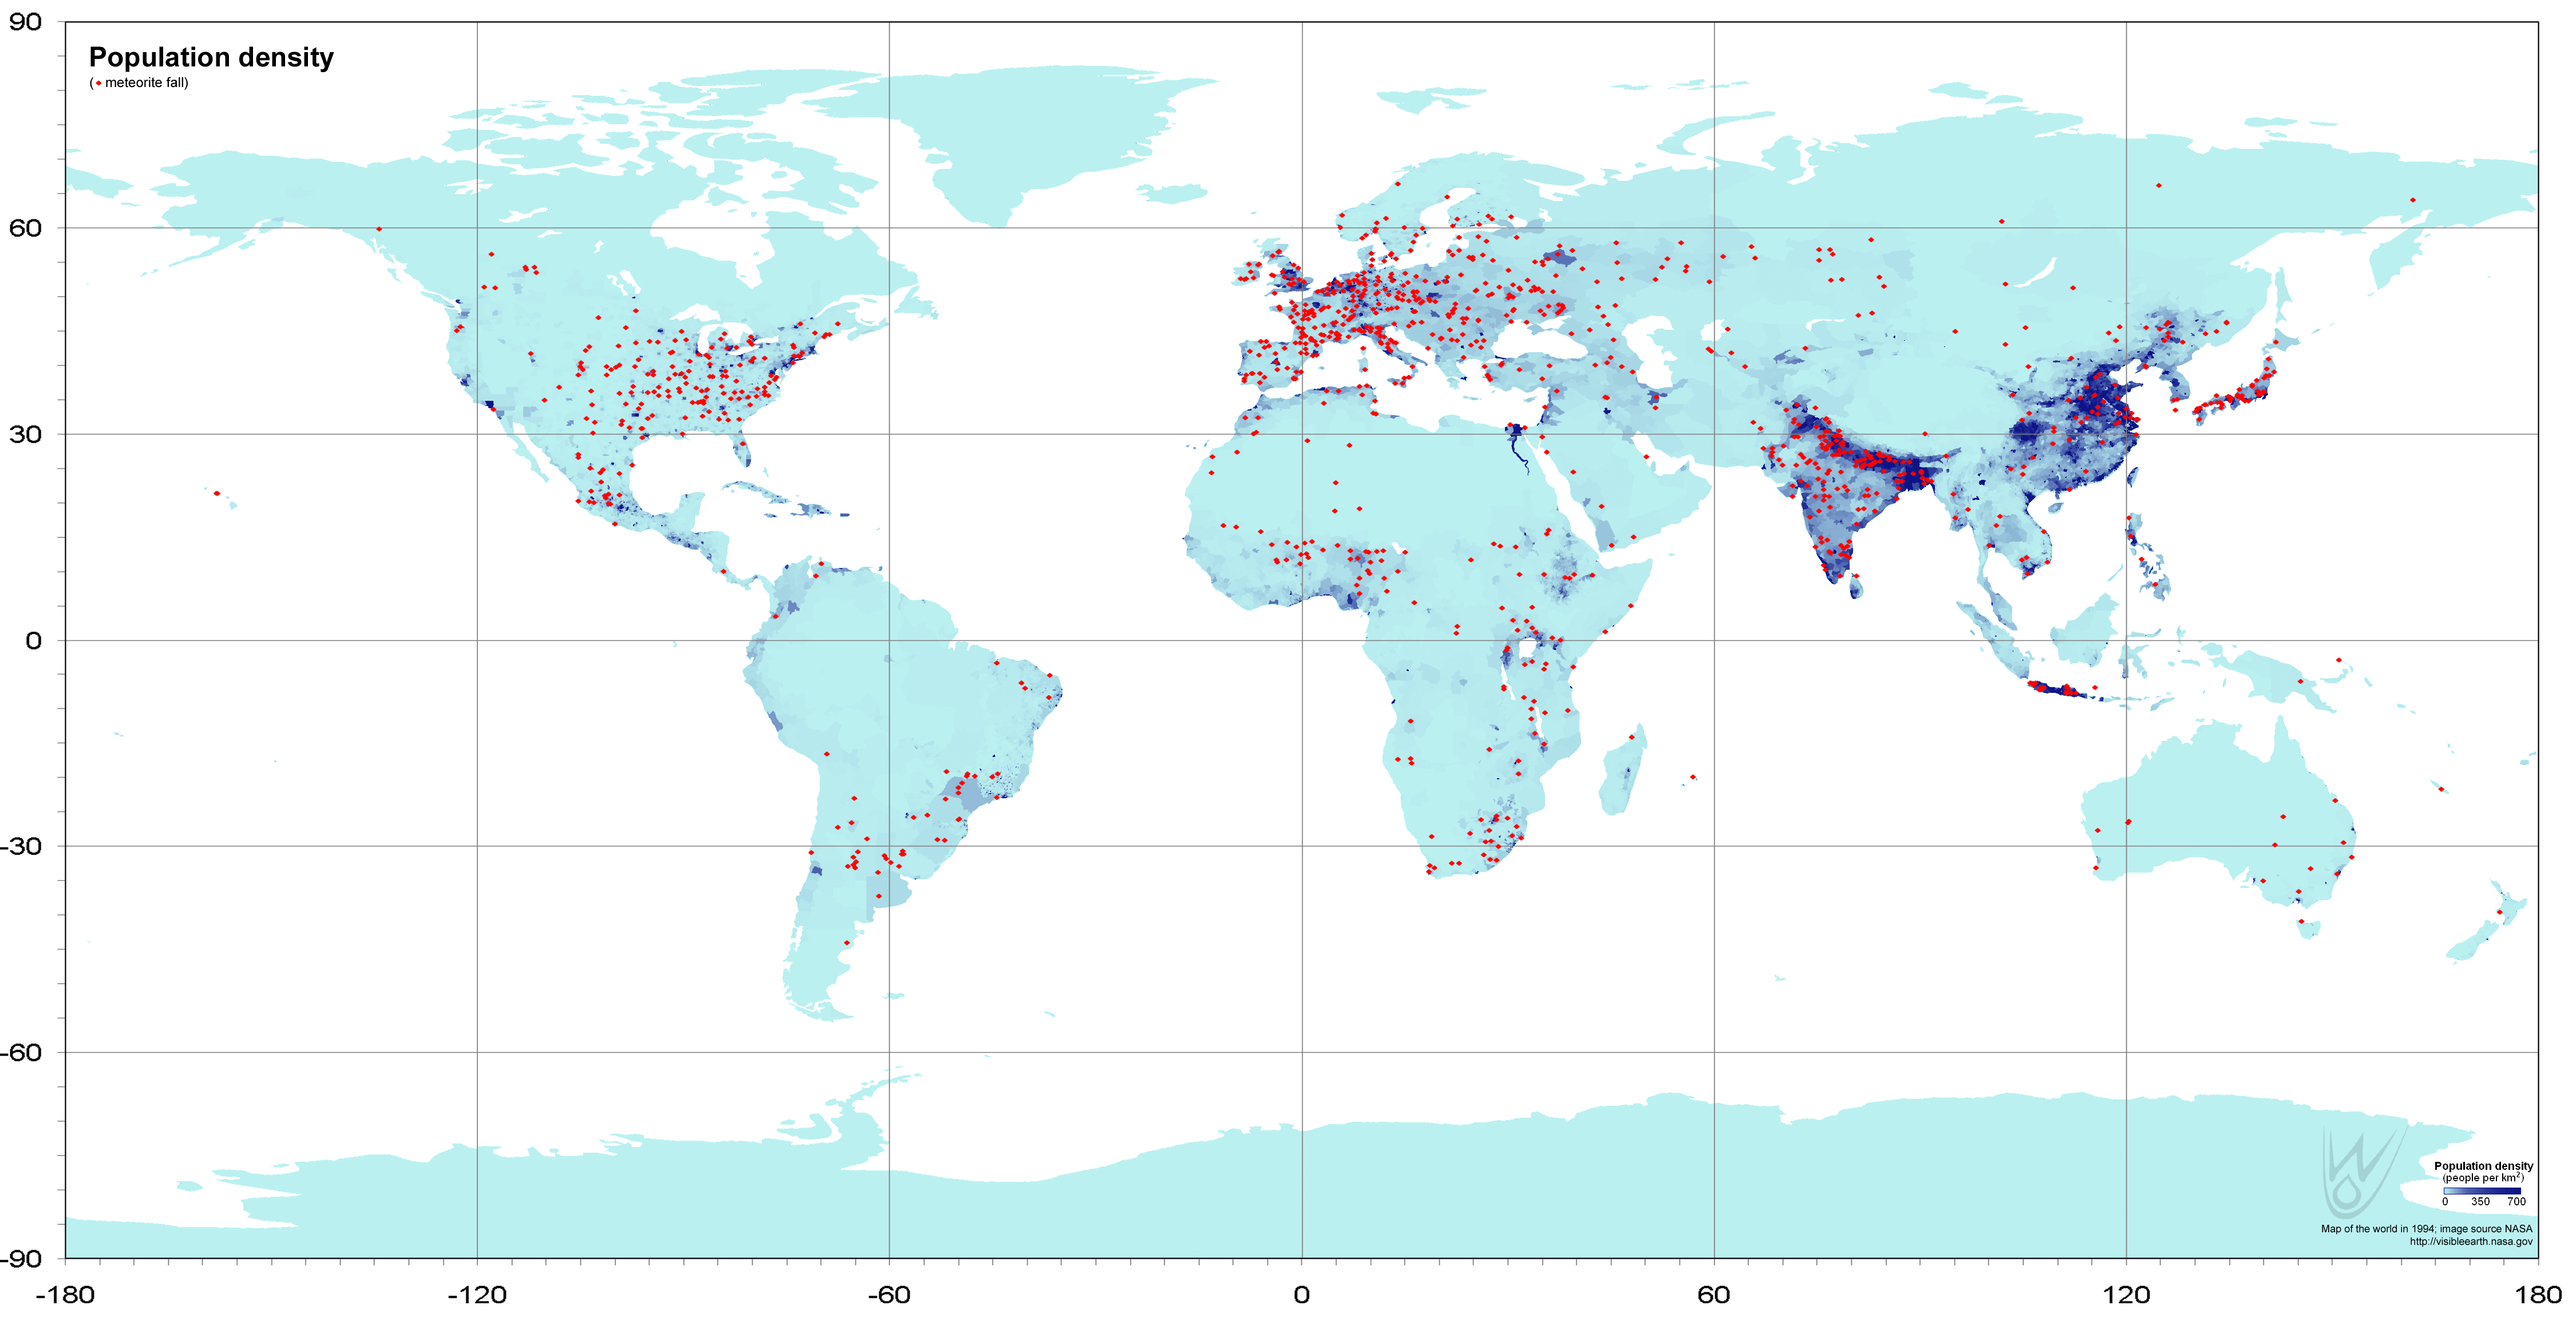 meteorite falls statistic versus population density